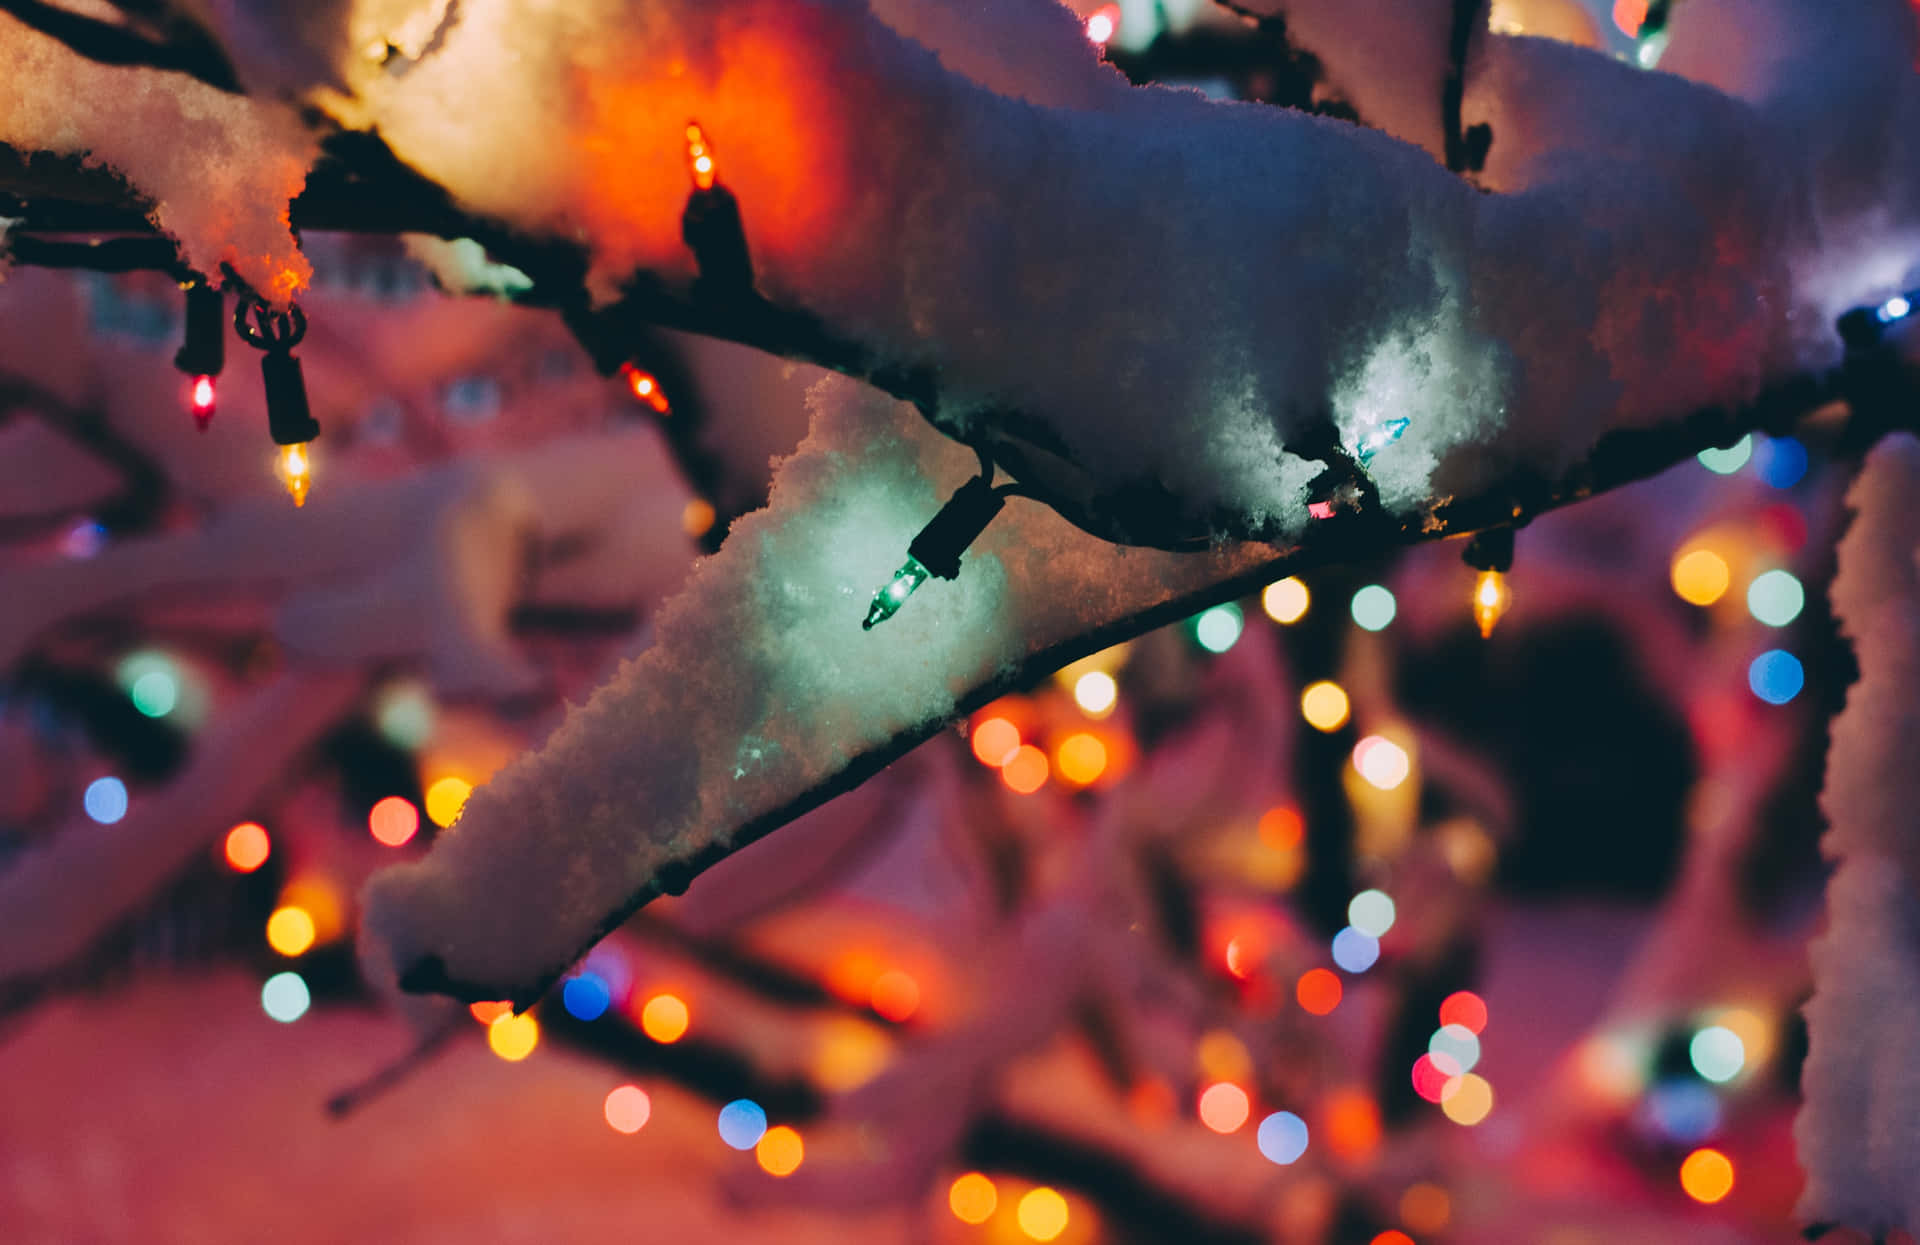 Enjoy the holiday season with beautiful Christmas lights